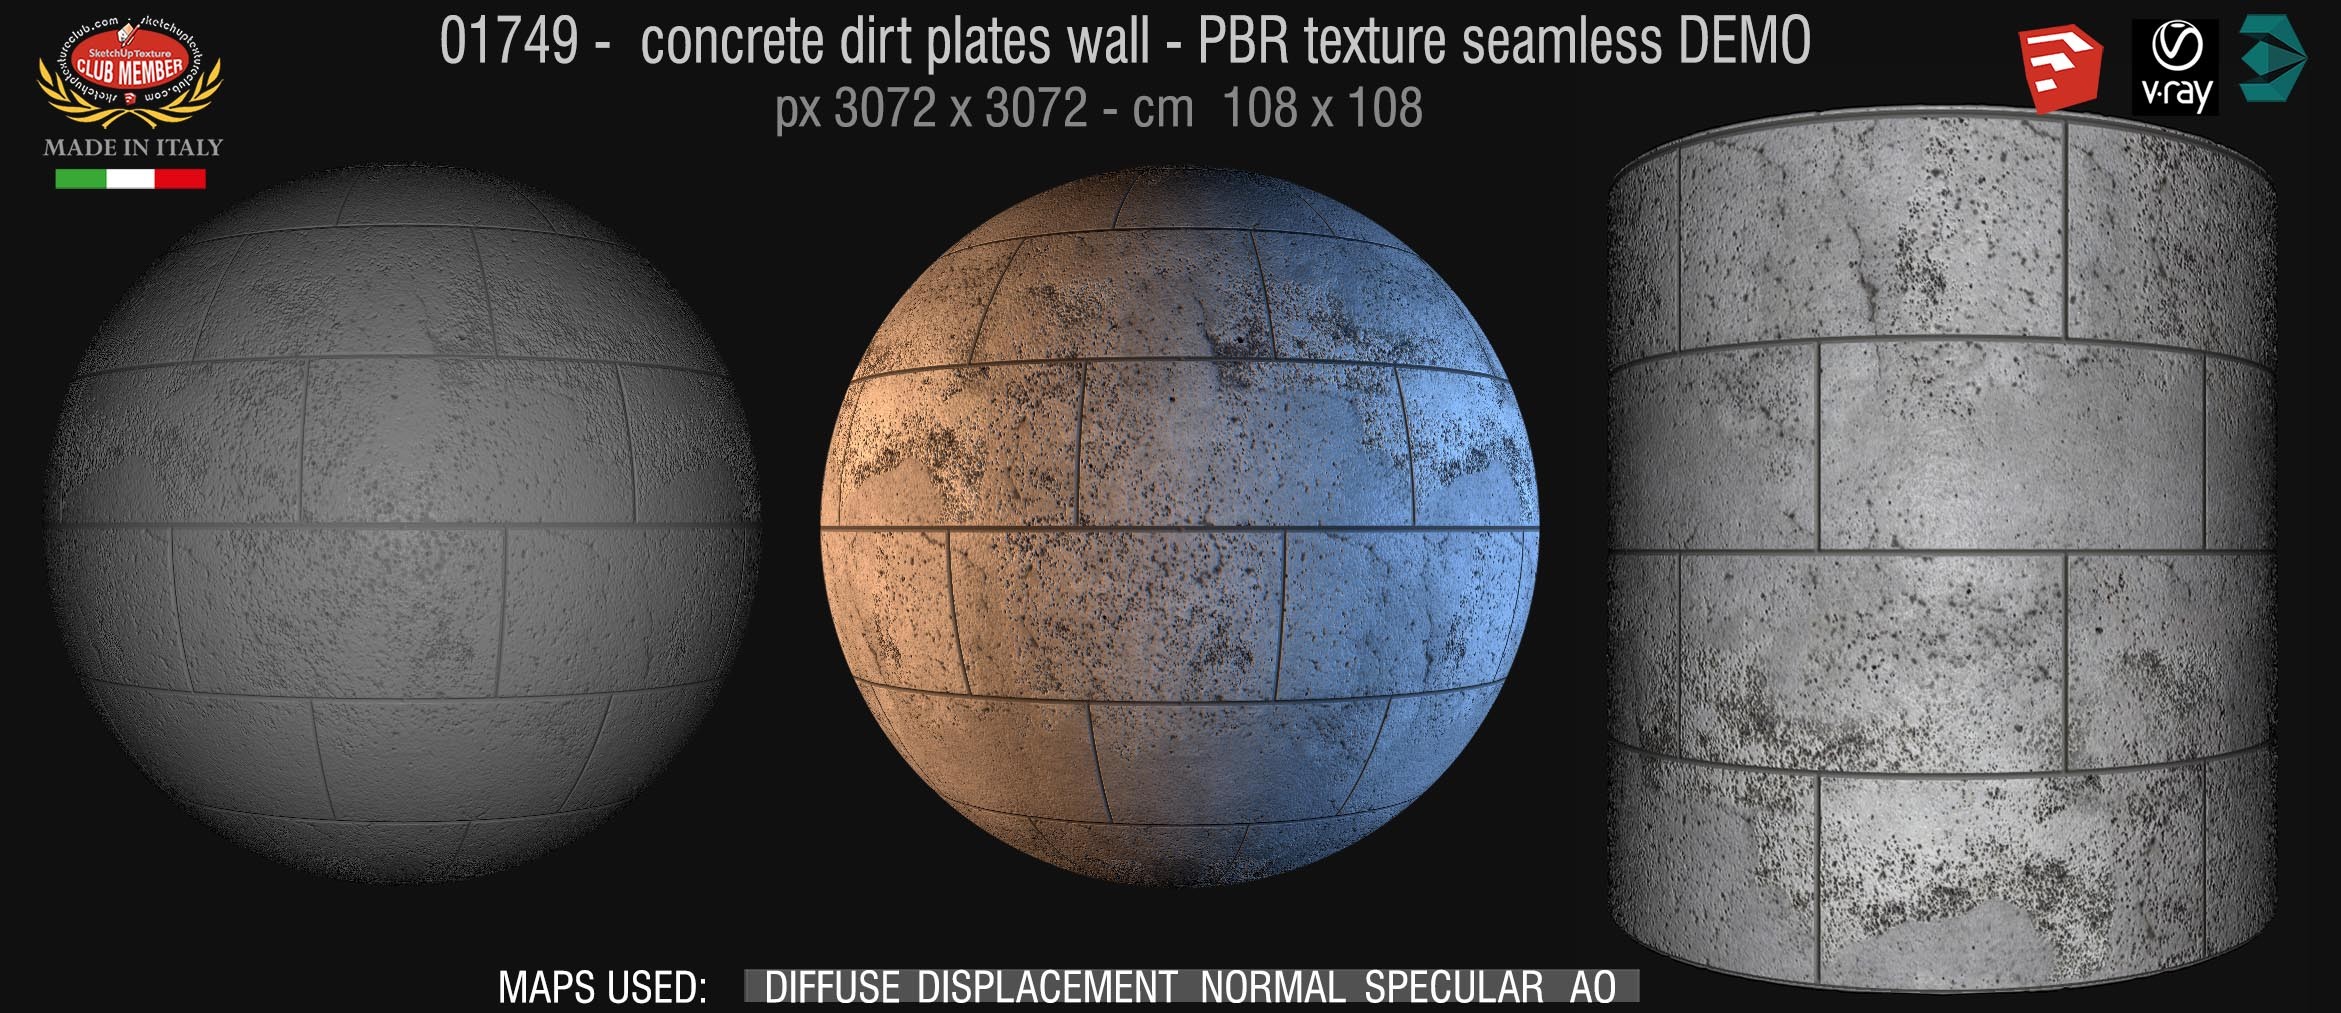 01749 concrete dirt plates wall PBR texture seamless DEMO